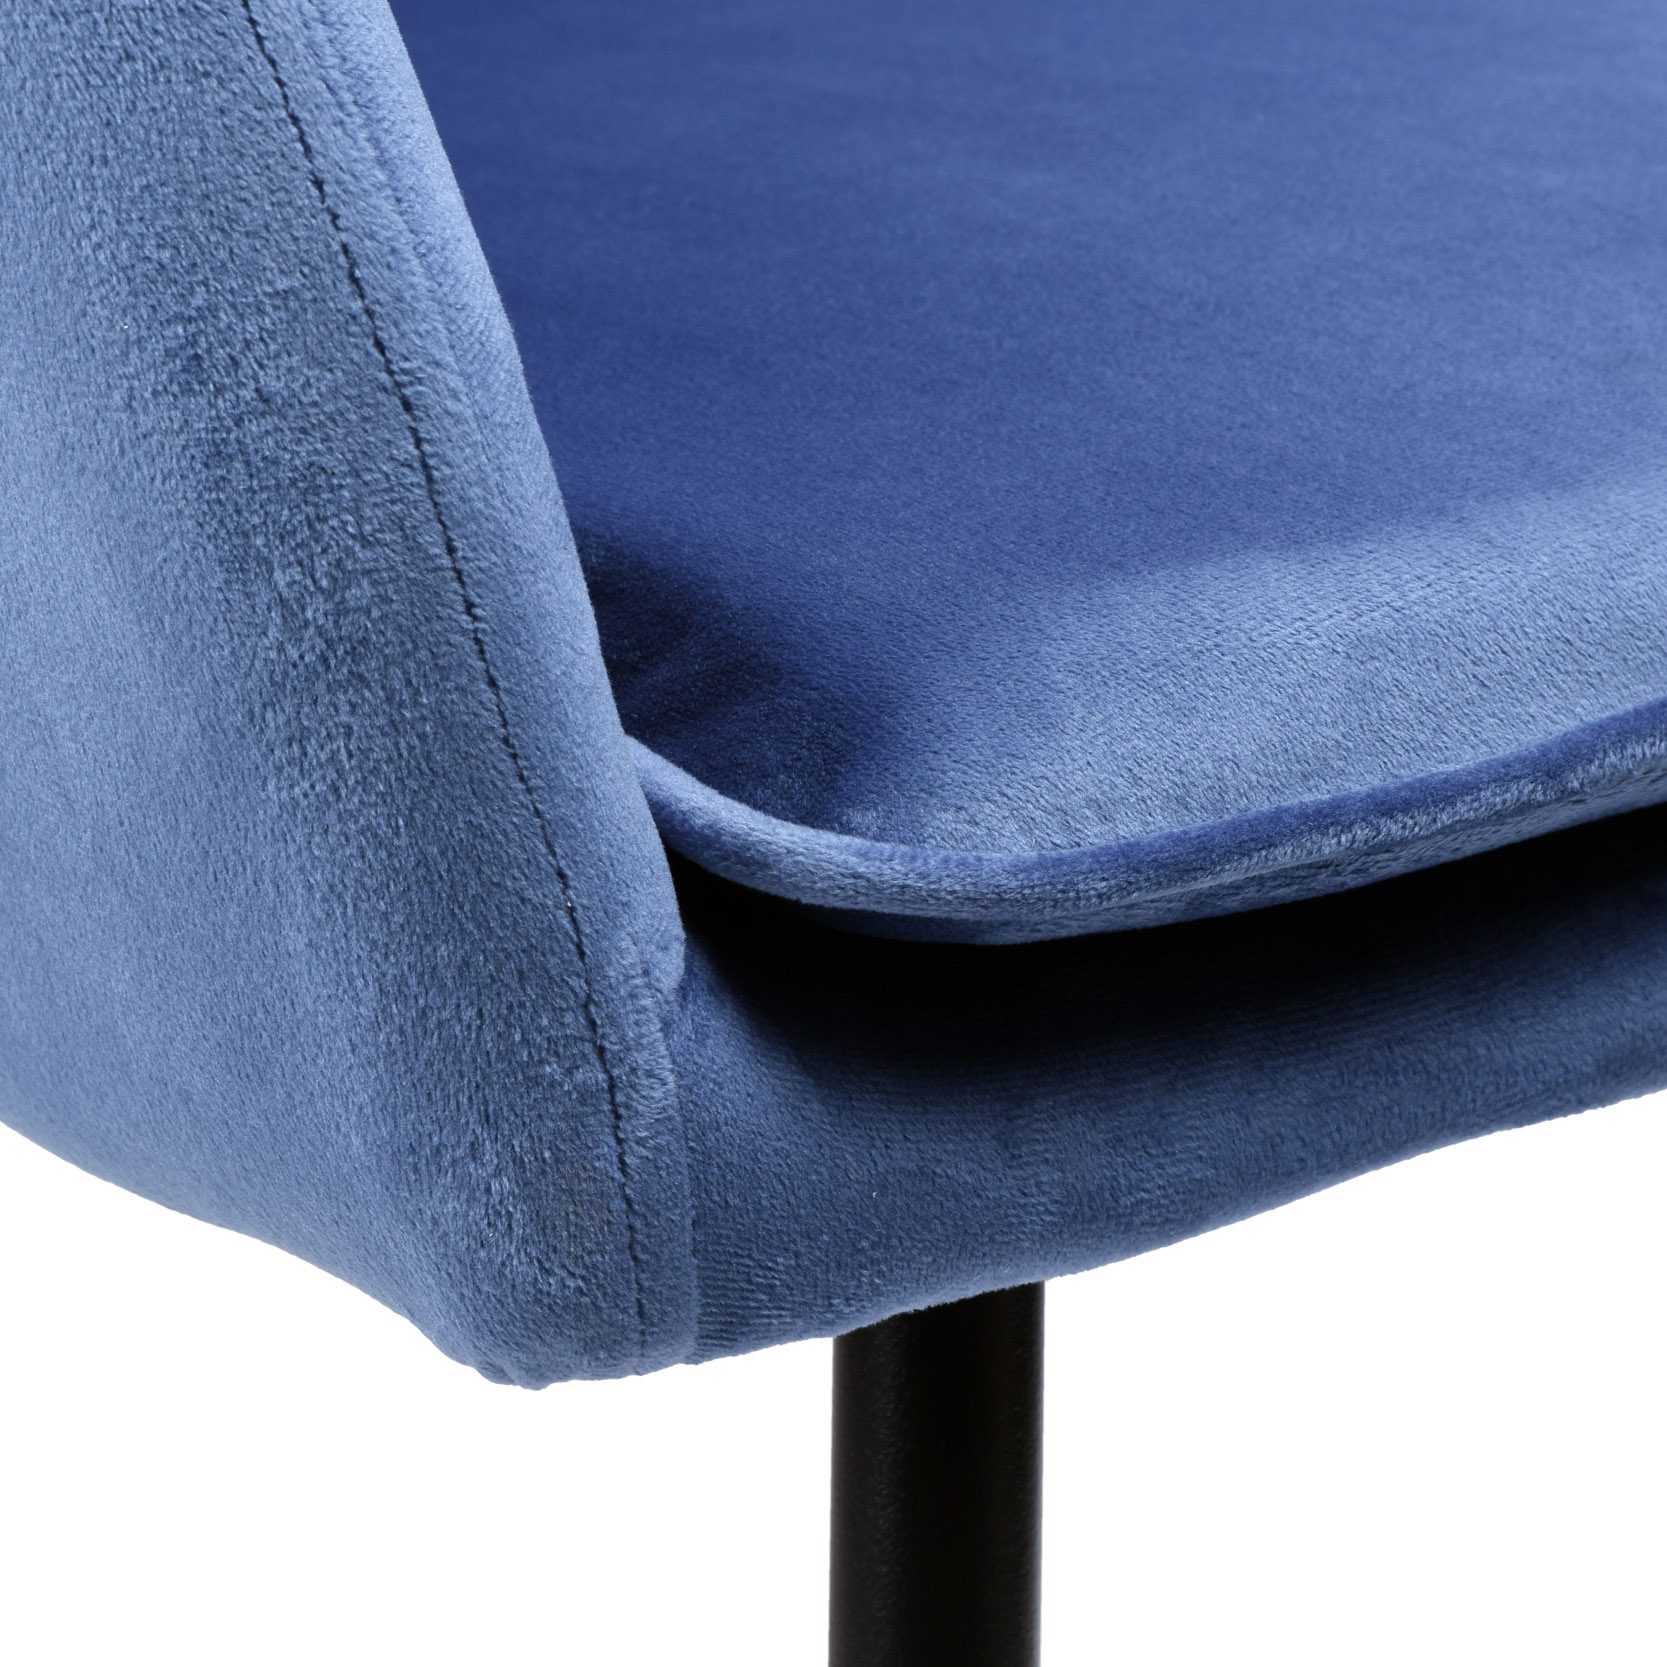 Krzesło welurowe SEVILLA VELVET niebieskie